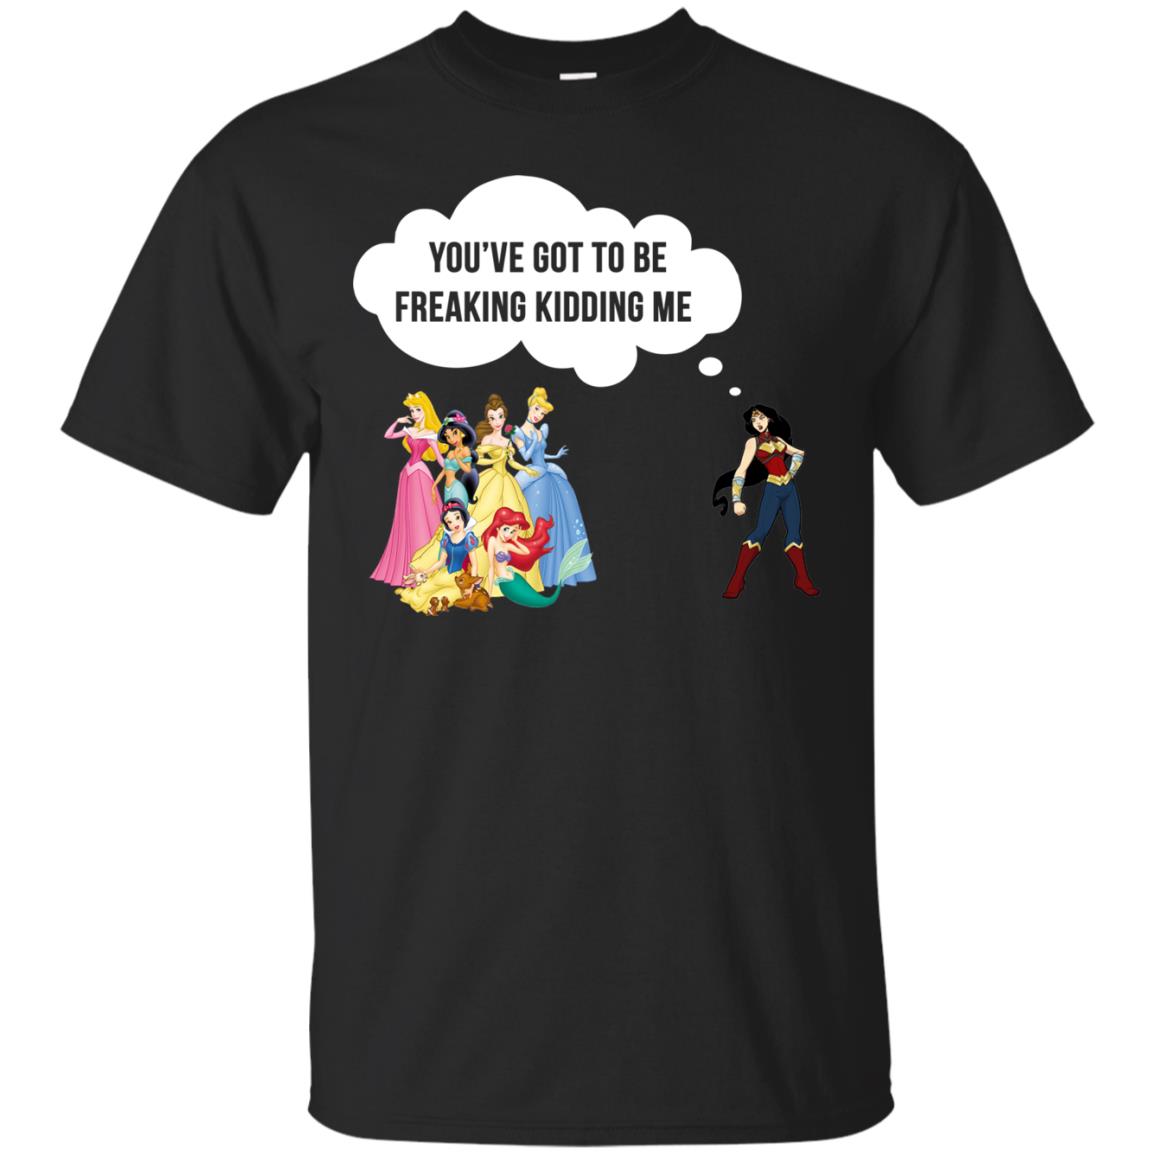 Wonder Woman vs Disney princes - You've got to be freaking kidding me t shirts, hoodies, tank